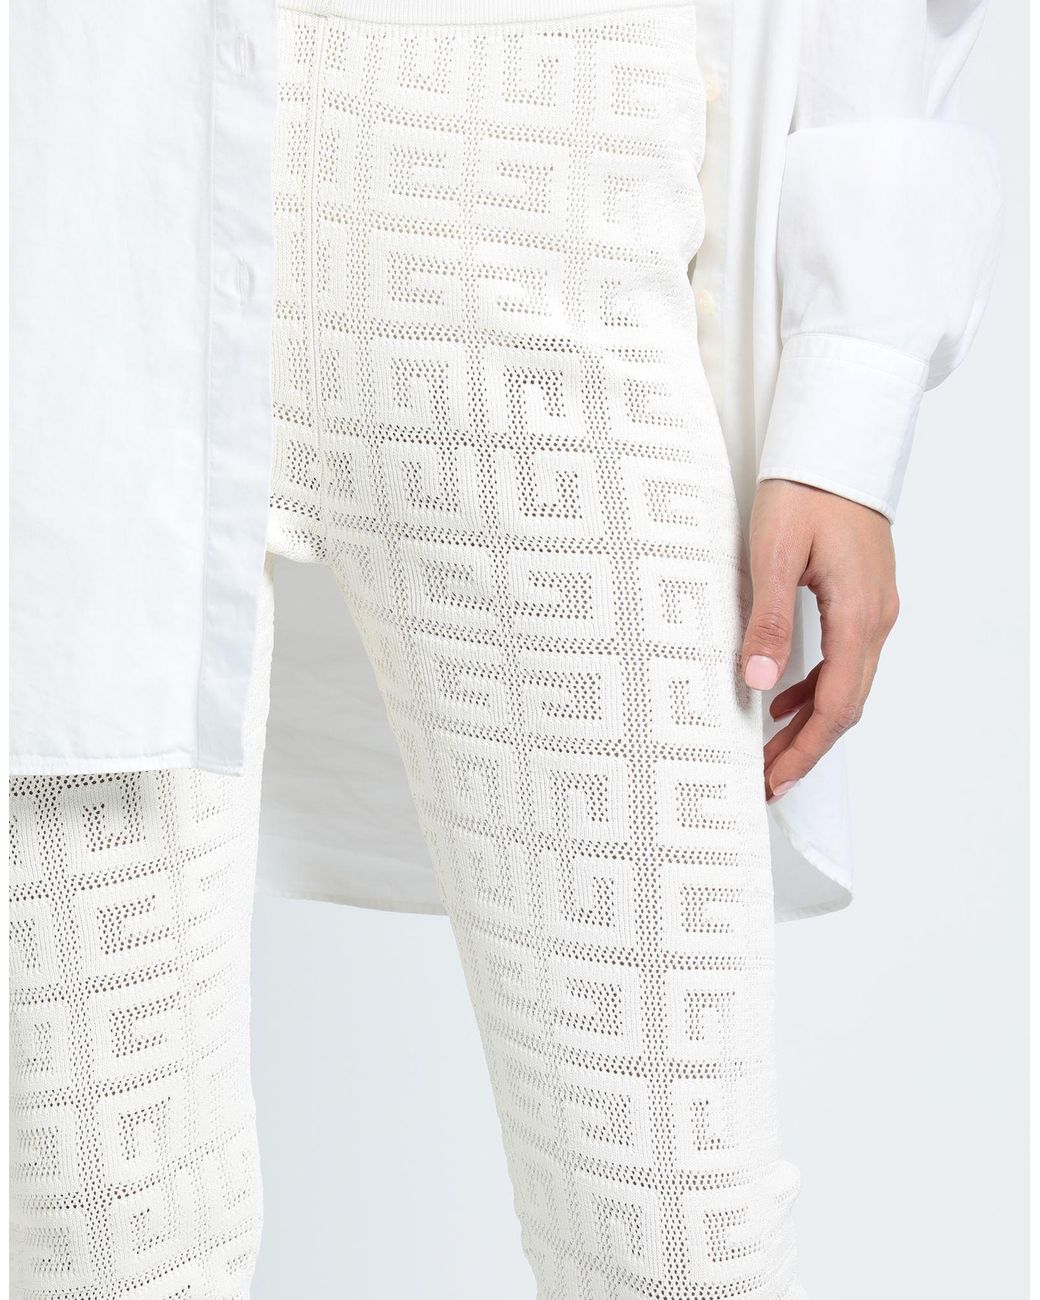 Givenchy Off-White Monogram Logo Leggings